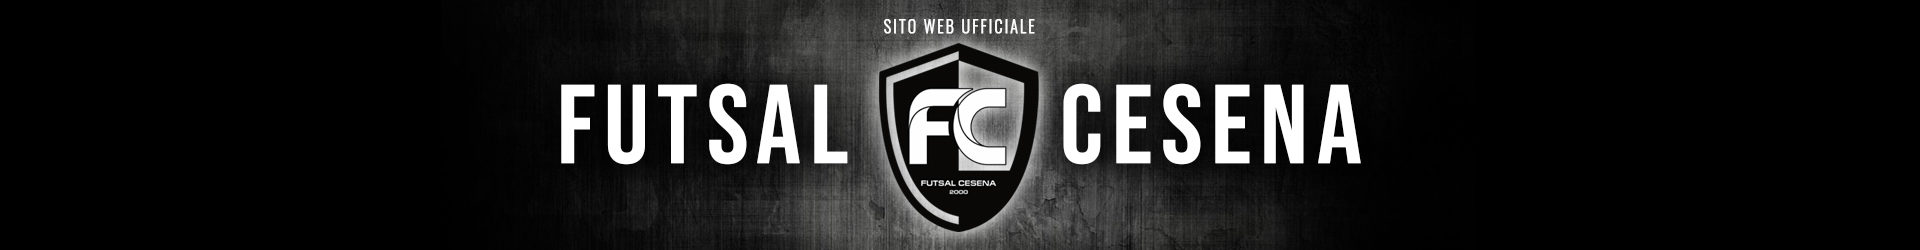 PRE PARTITA: Futsal Cesena-Etabeta (3a giornata)